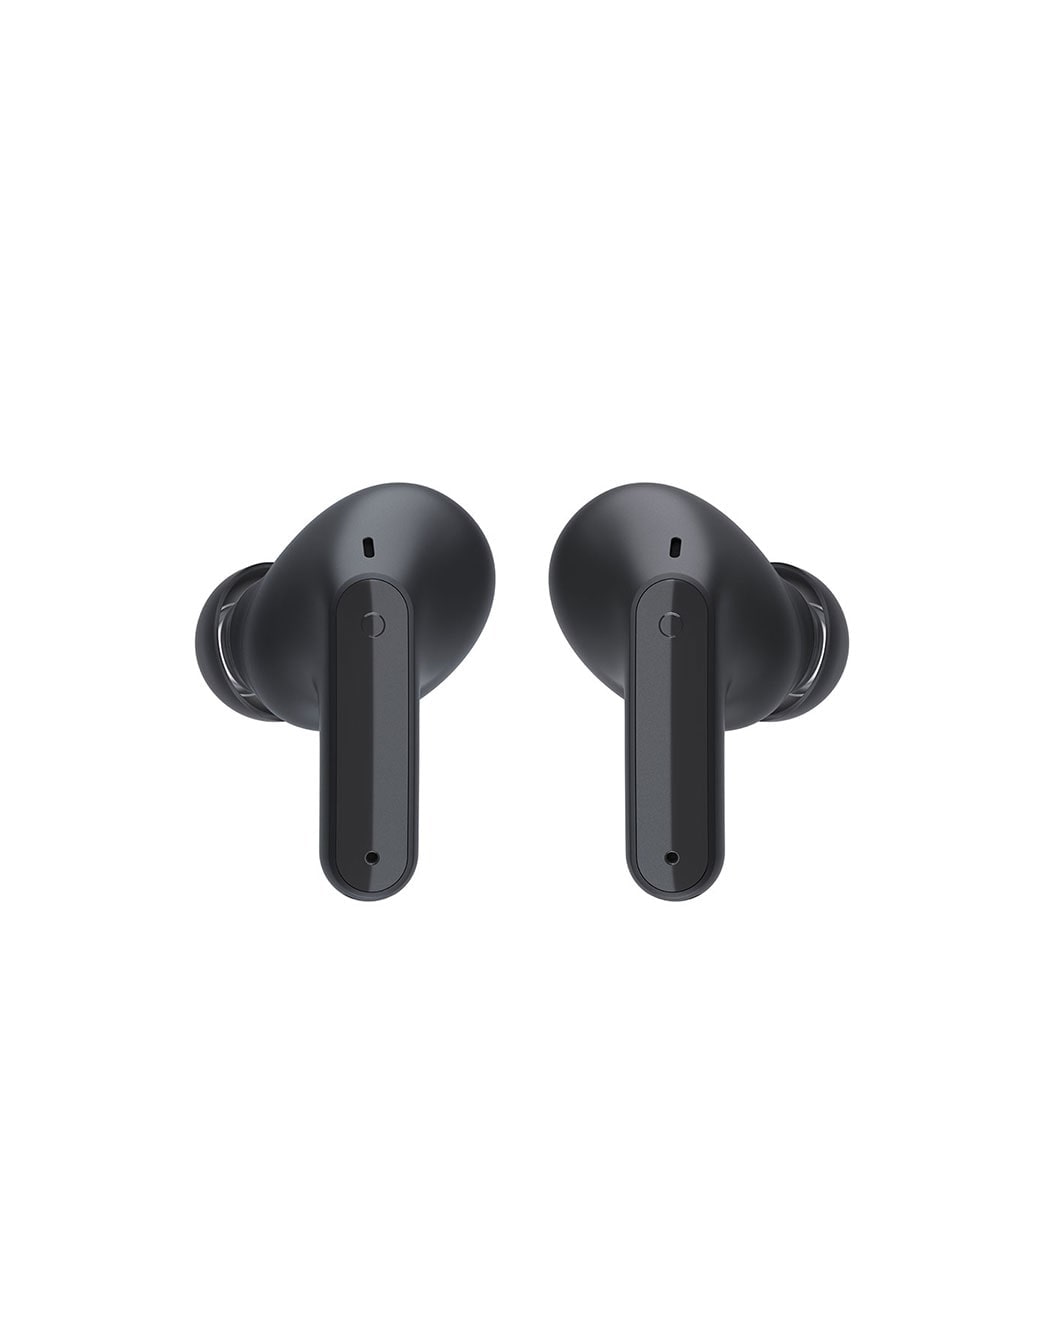 LG TONE Free FP5 Black Wireless Earbuds | LG UAE